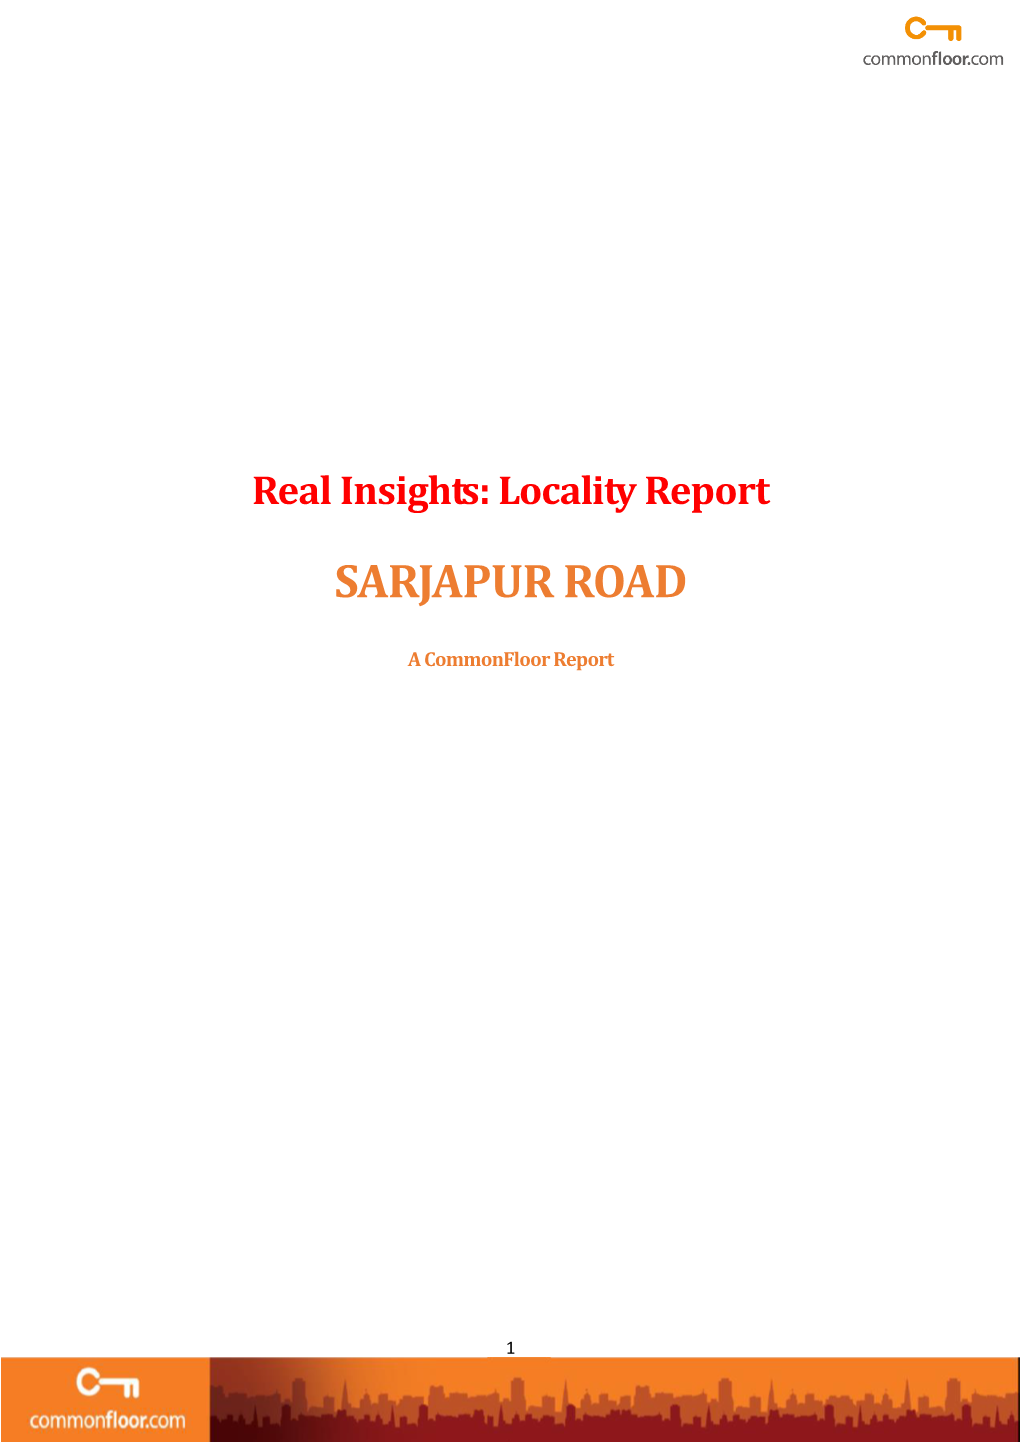 Sarjapur Road